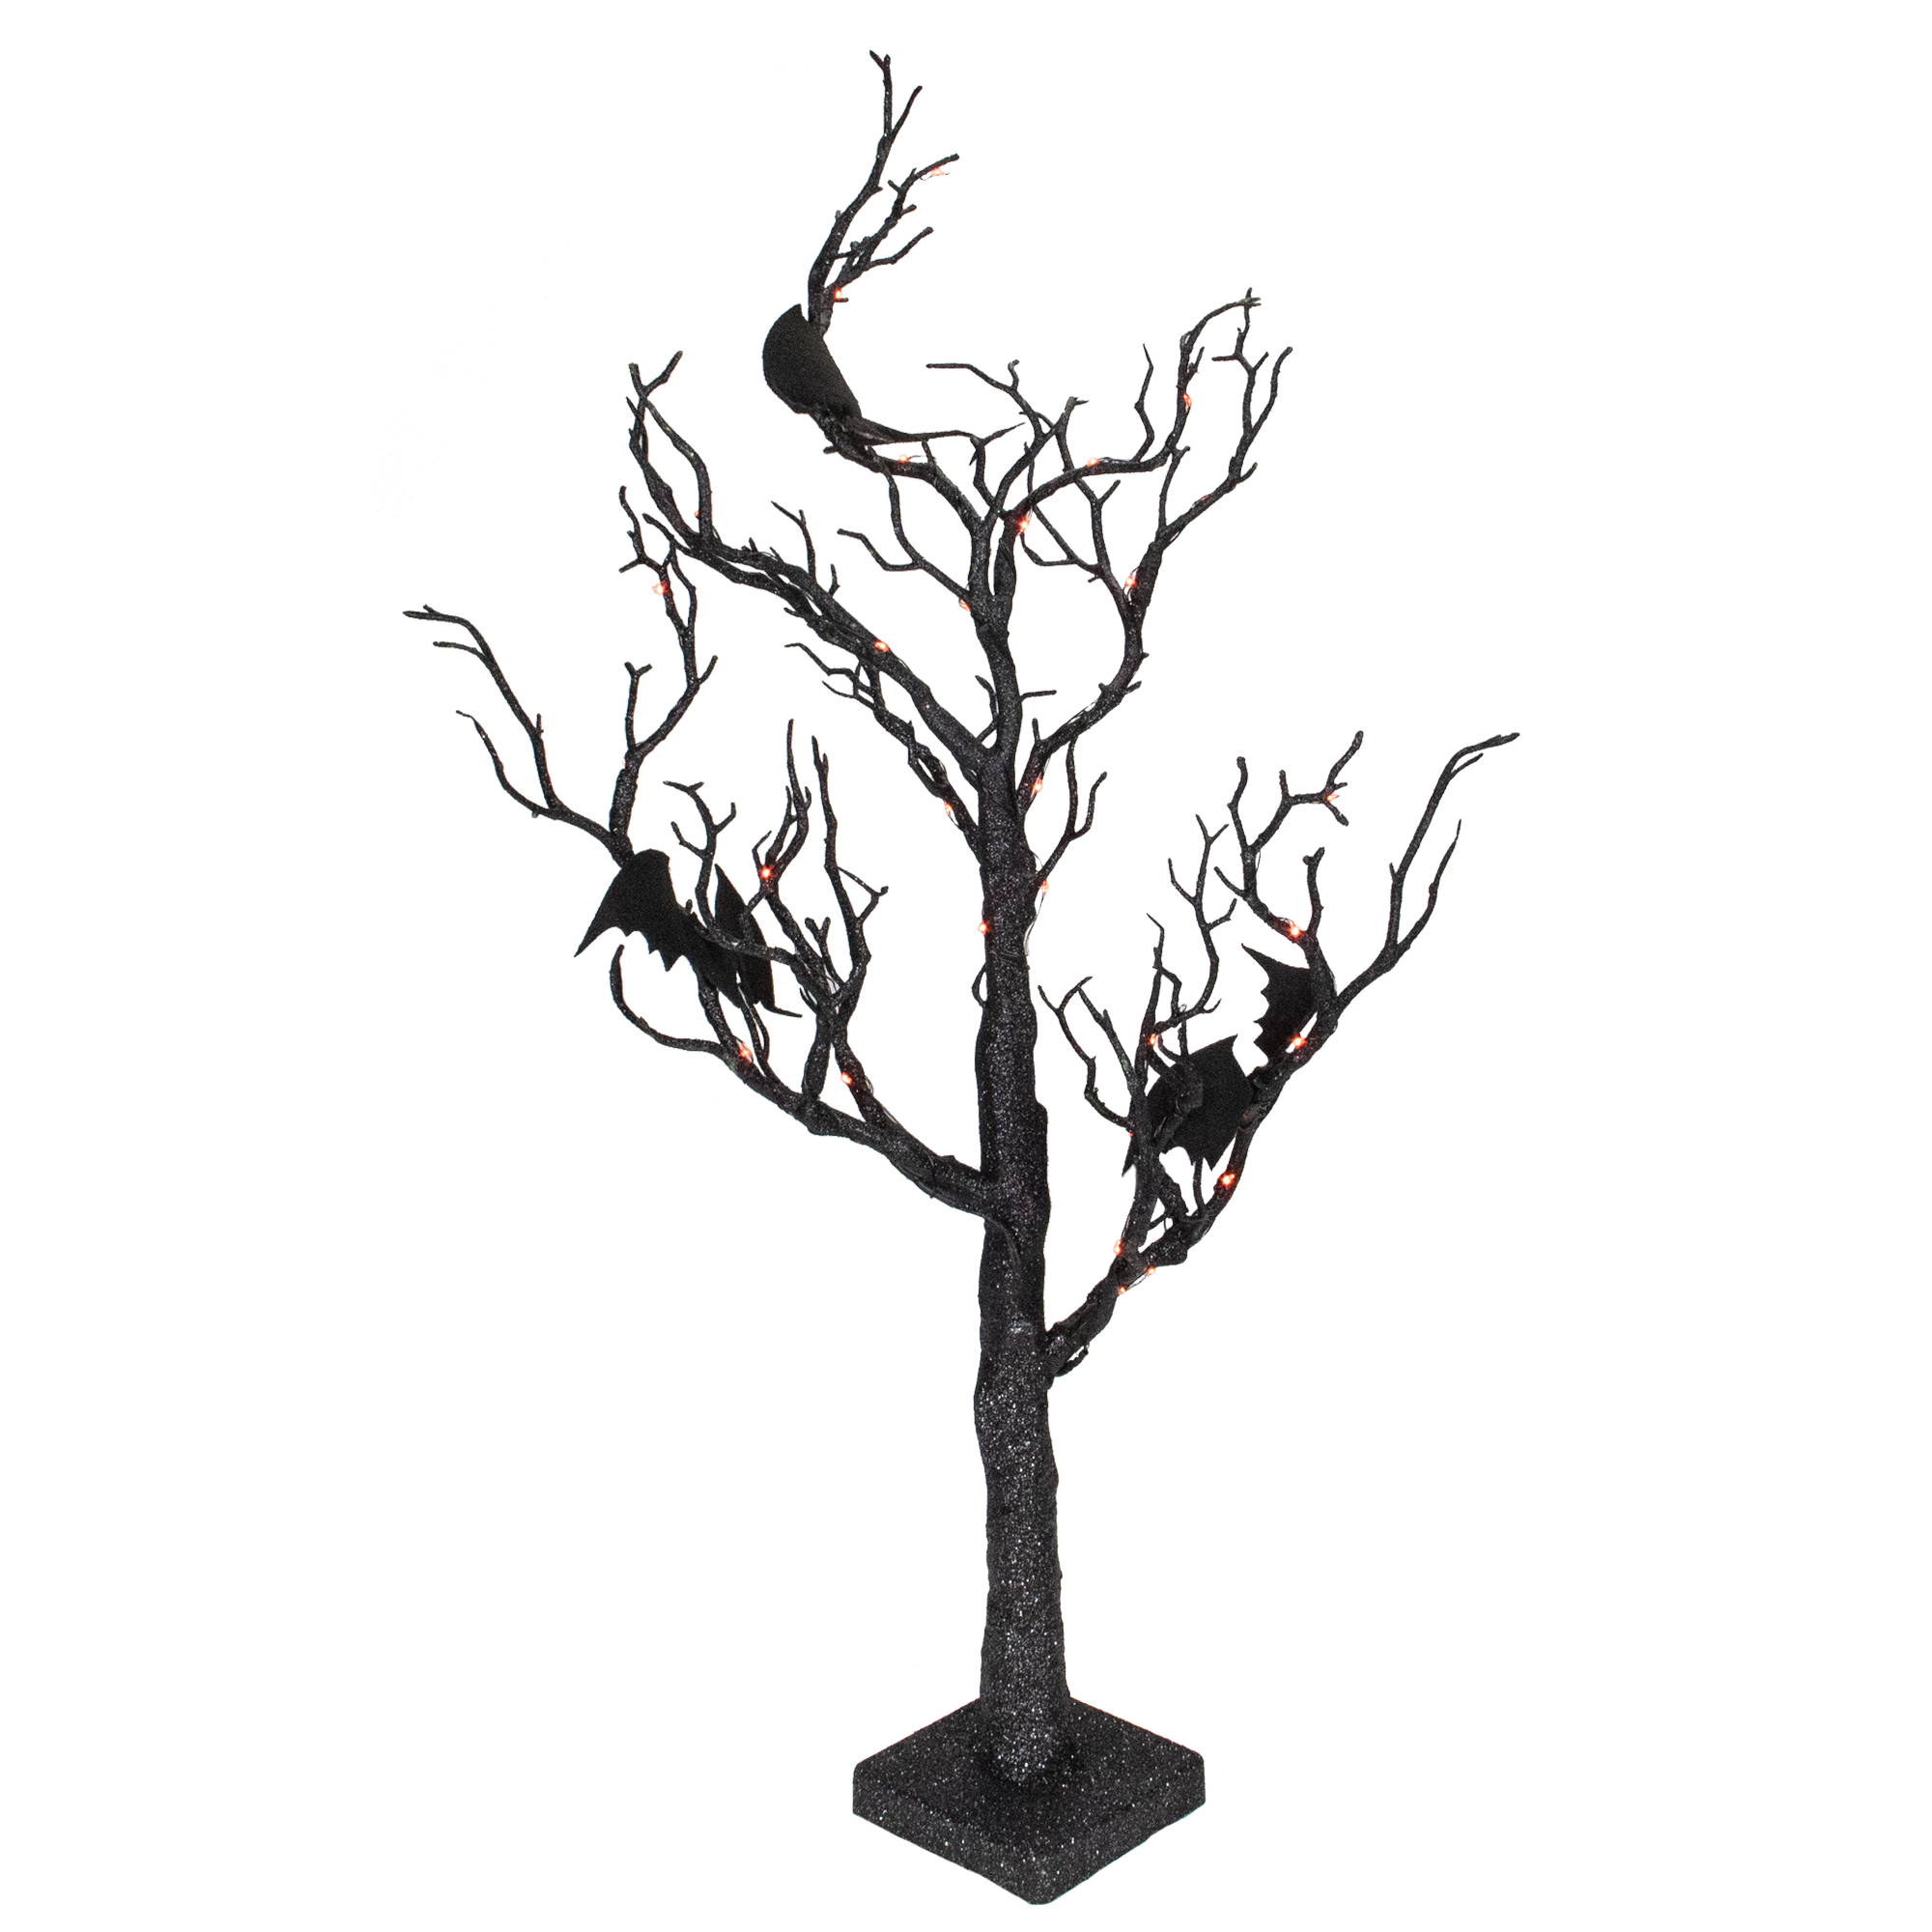 Northlight 26.5" LED Lighted Black Glittered Tabletop Halloween Tree with Bats - Orange Lights